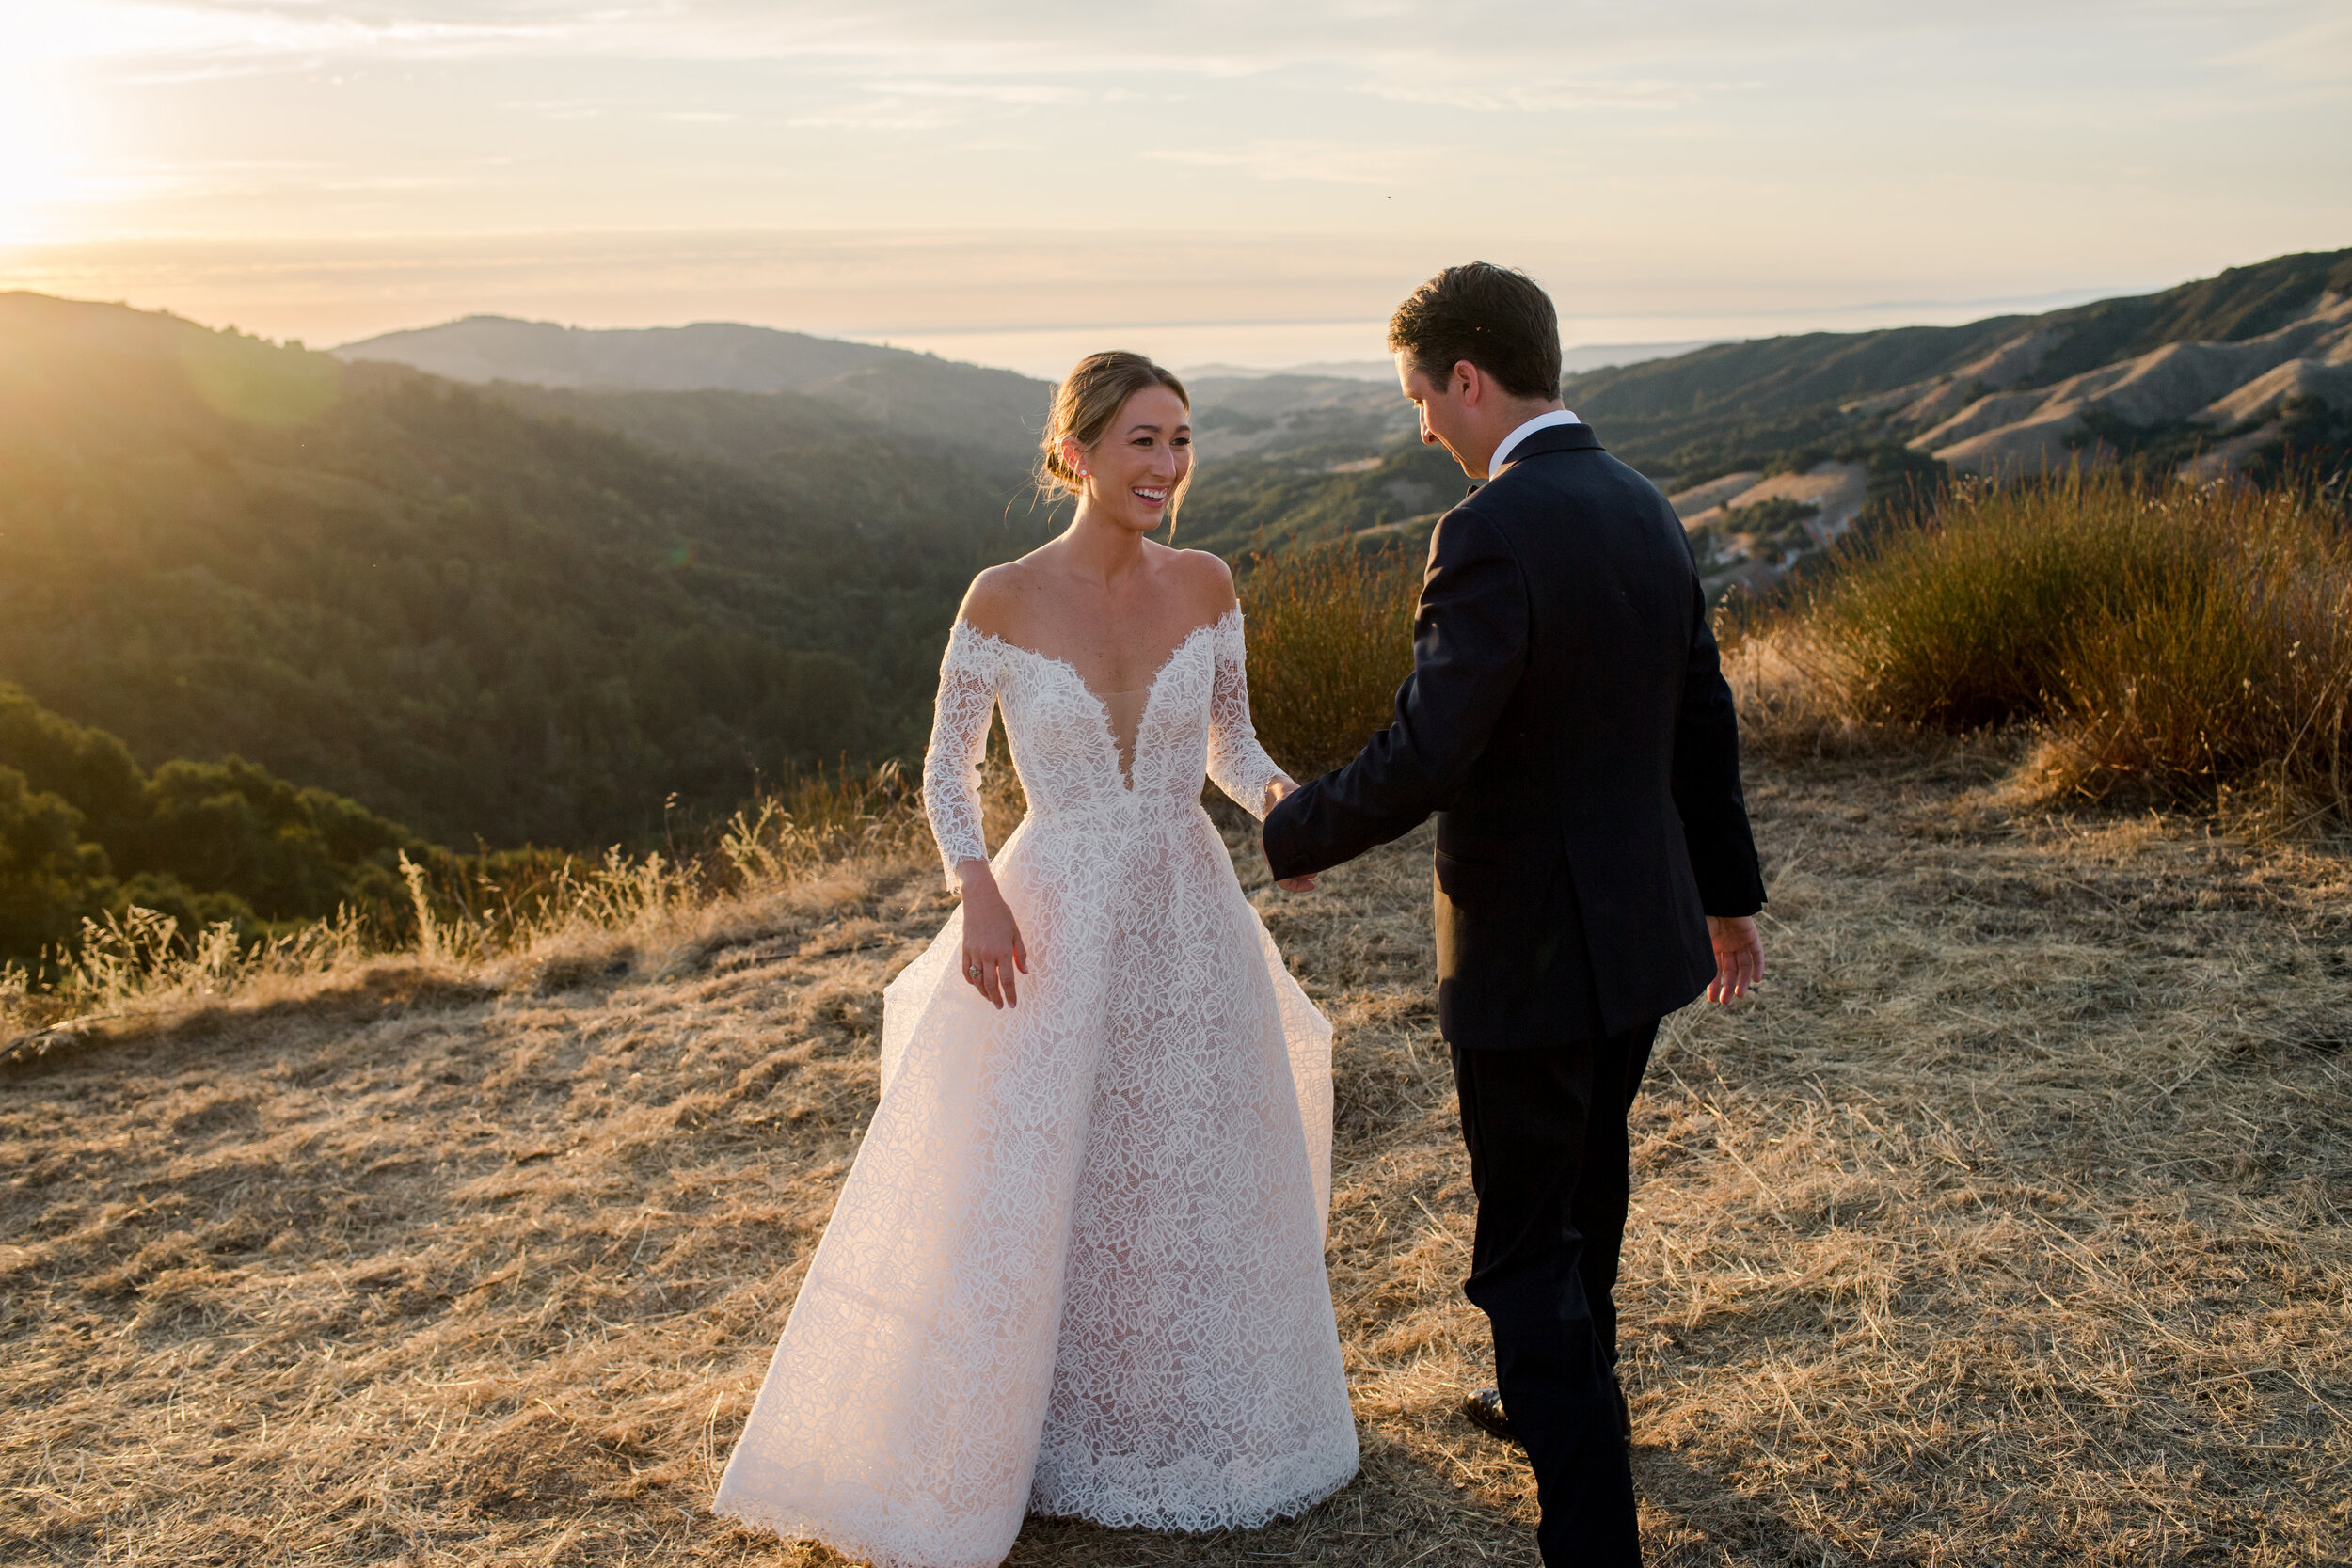 Carmel-Valley-Redwoods-Santa-Lucia-Preserve-Liz-Banfield-Photographer-California-sophisticated-outdoor-wedding 63.JPG